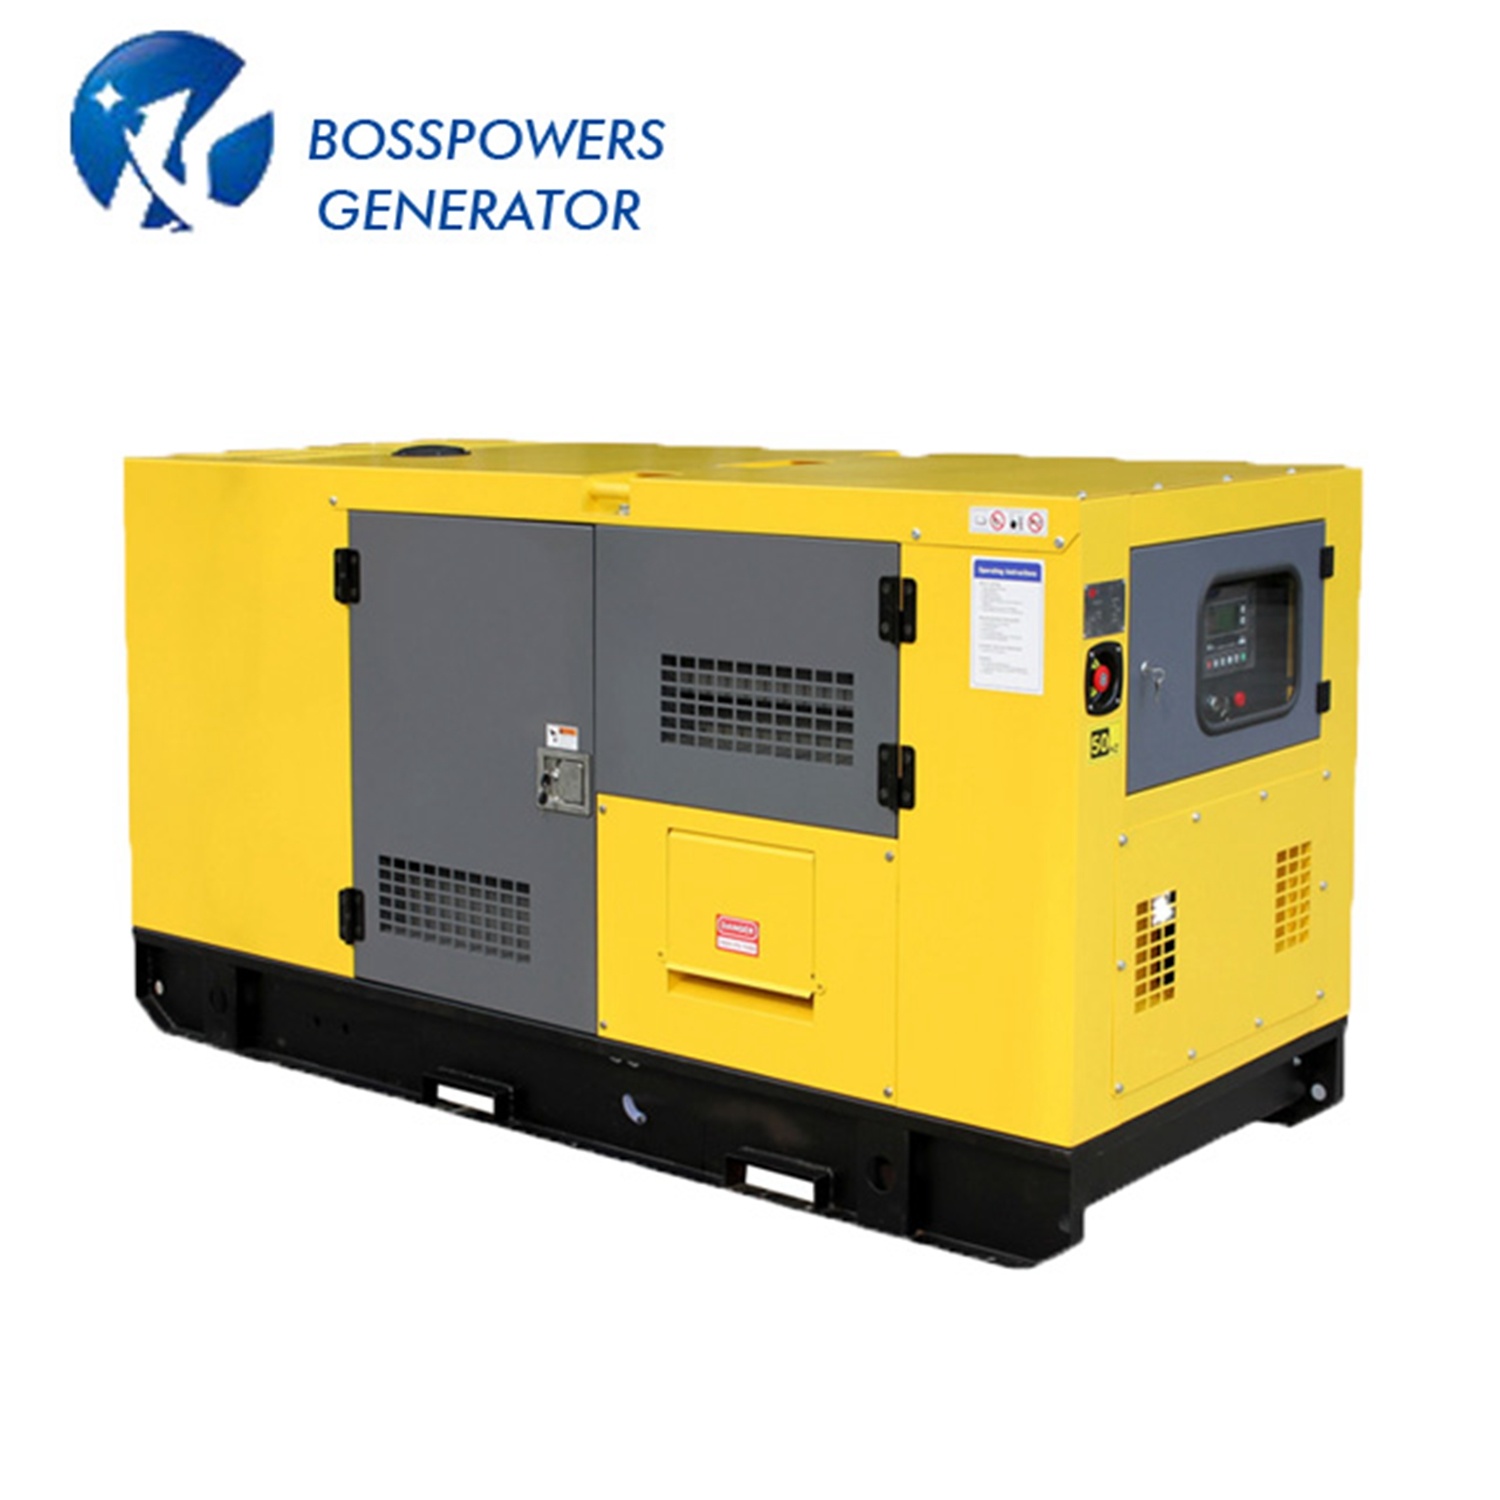 460kw Prime Power Soundproof Silent Diesel Generator Powered by Dp180la